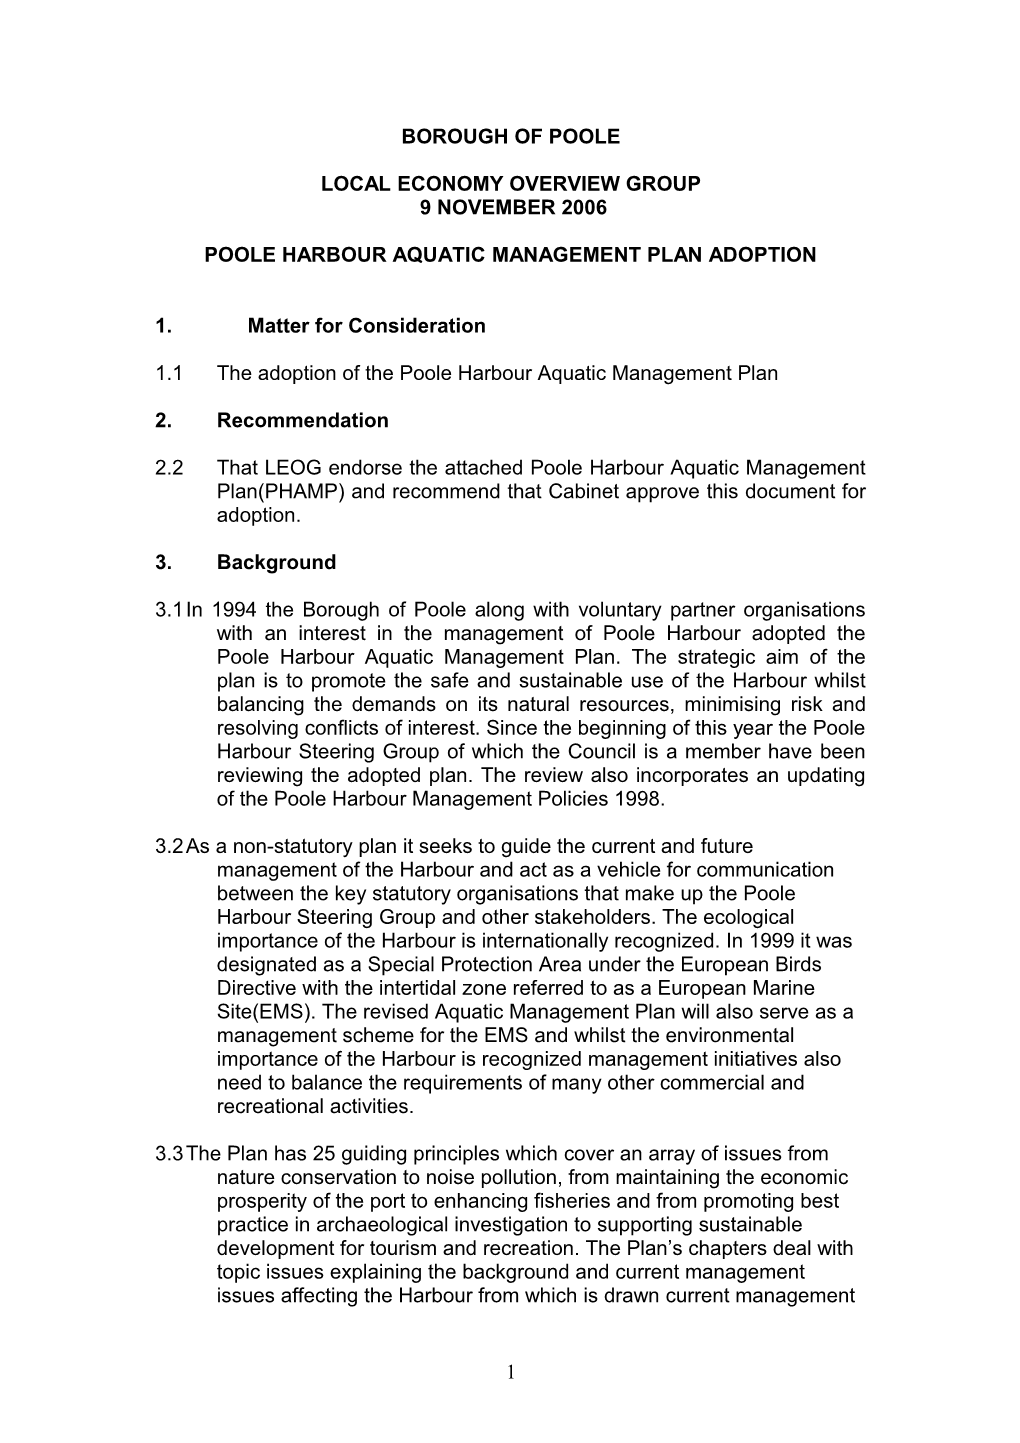 Poole Harbour Aquatic Management Plan Adoption